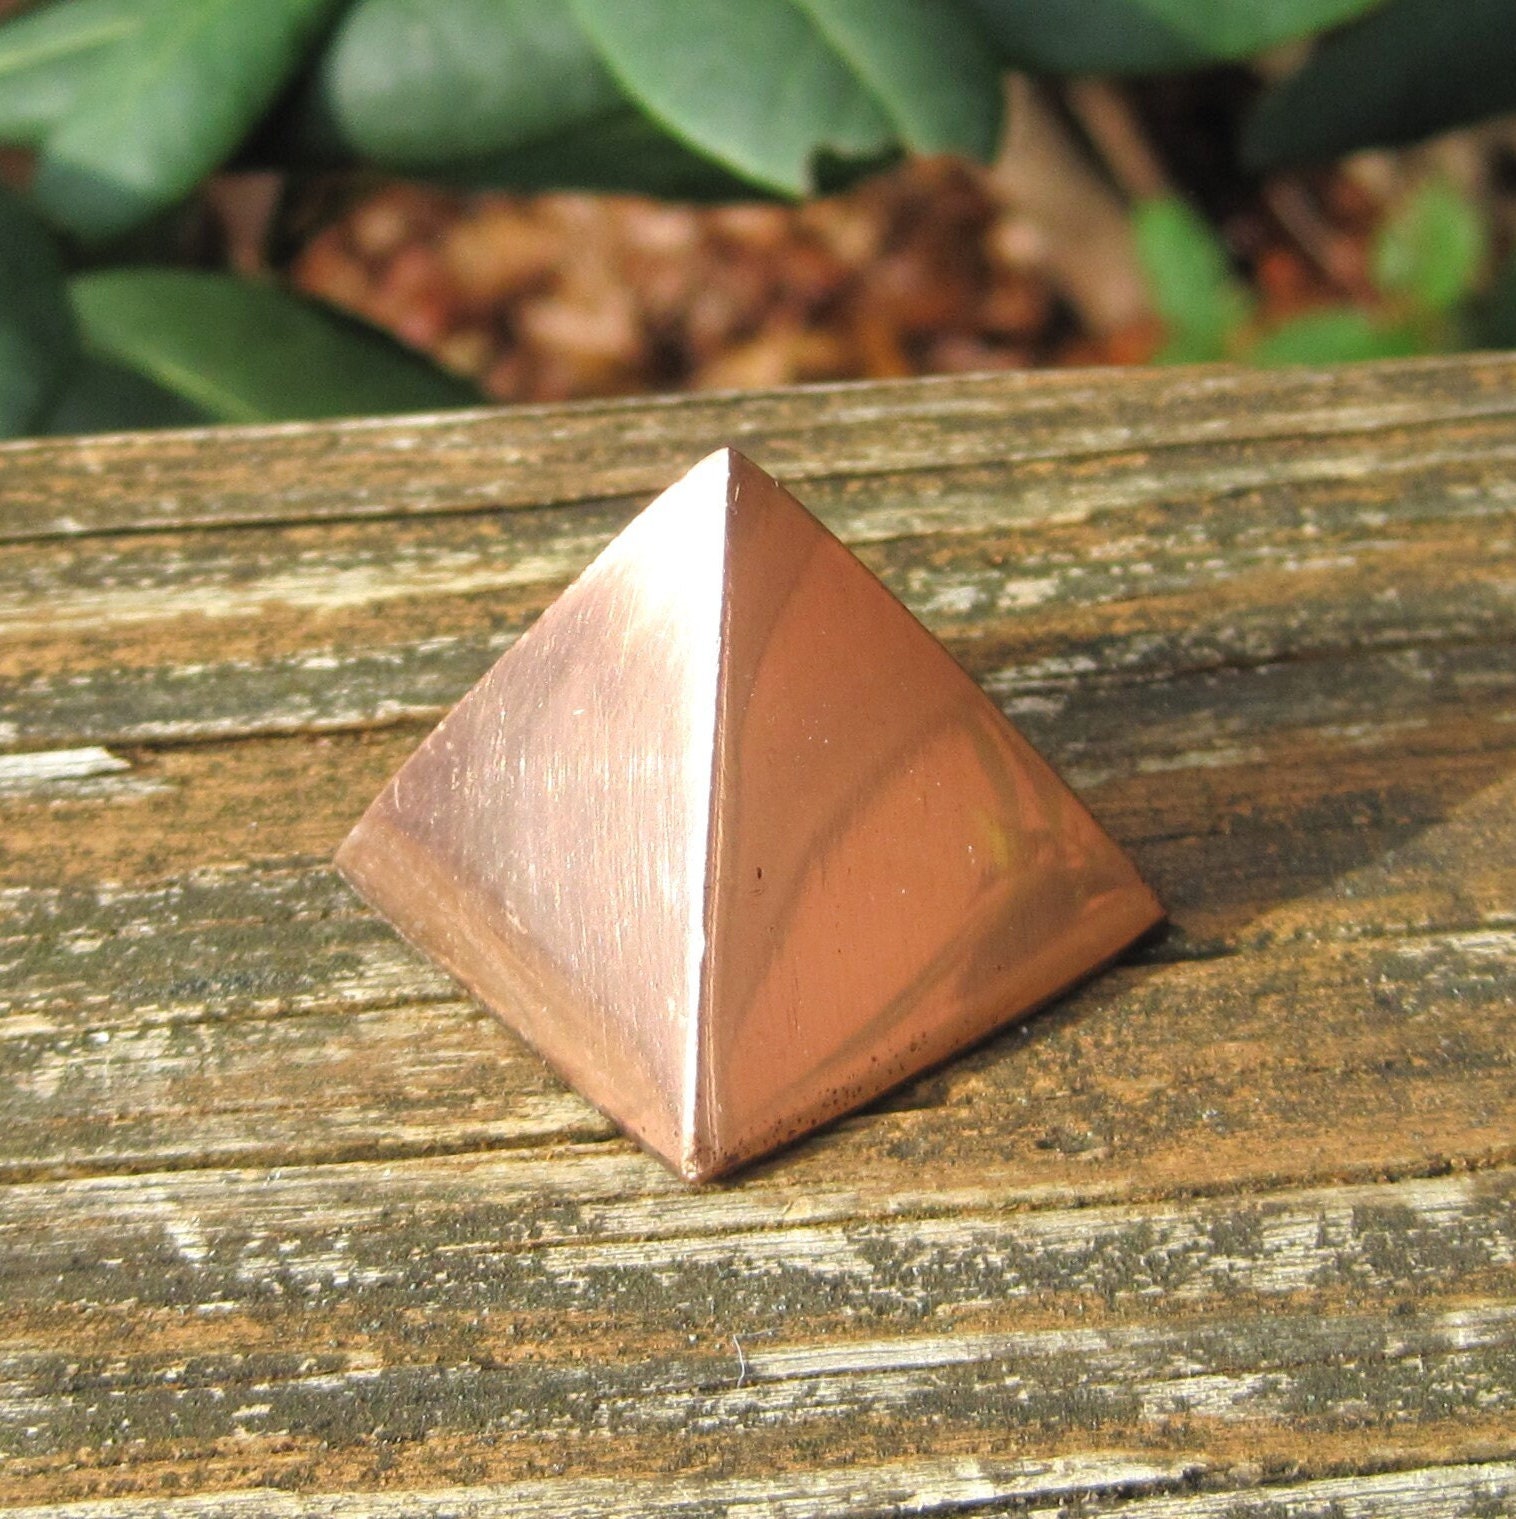 Small Copper Pyramid for Grounding. Small Meditation Pyramid.